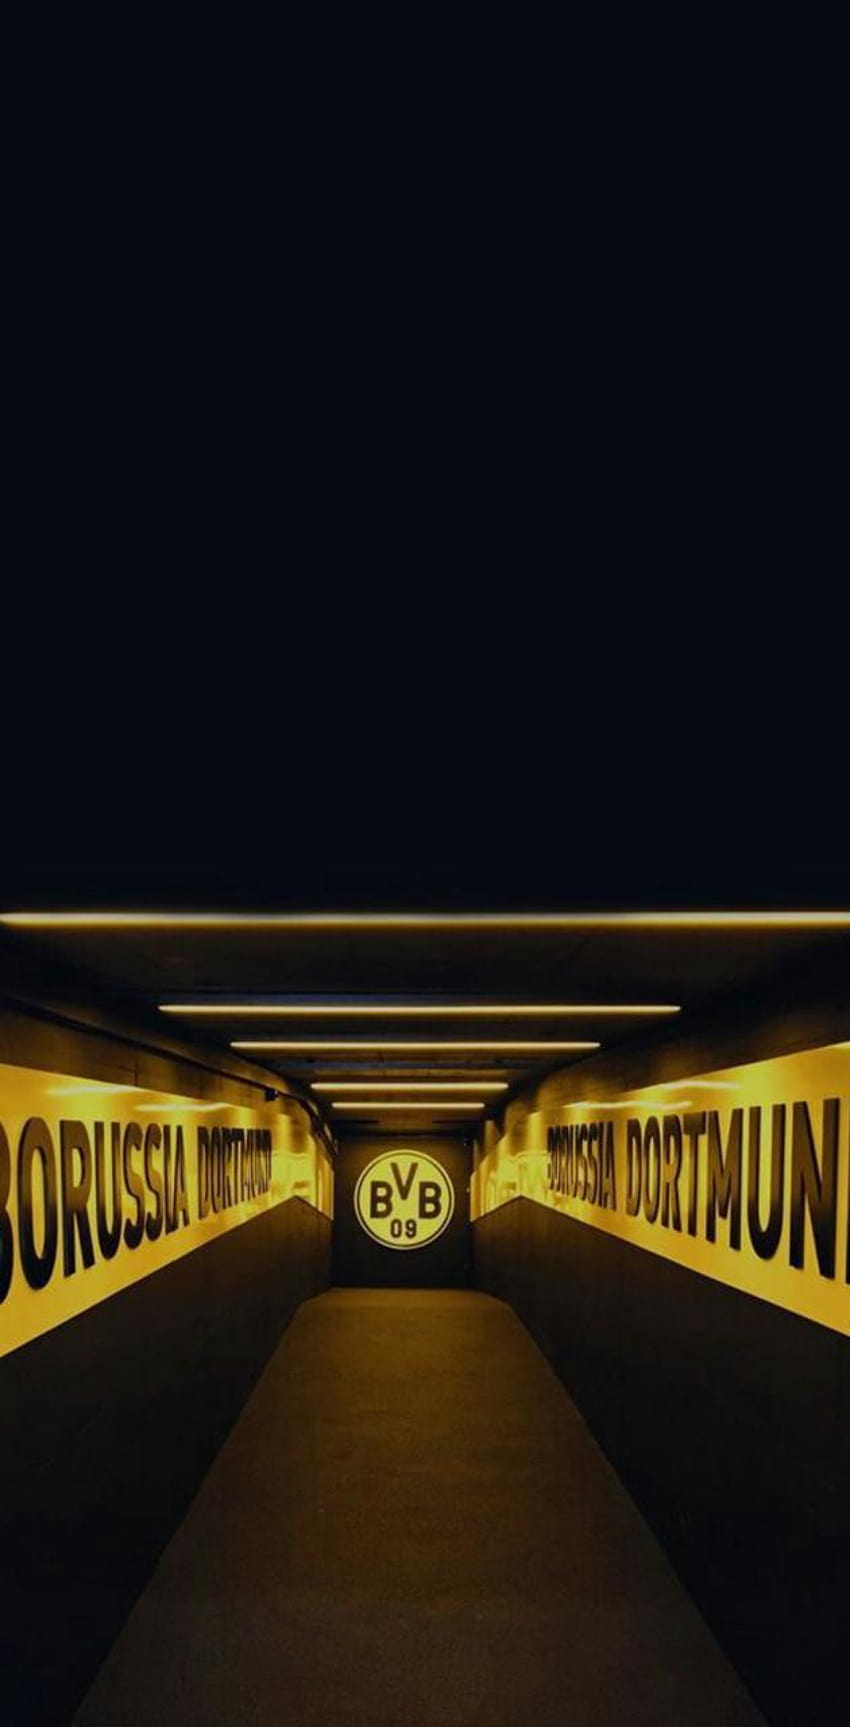 Aslam785 tarafından Borussia Dortmund, dortmund iphone HD telefon duvar kağıdı